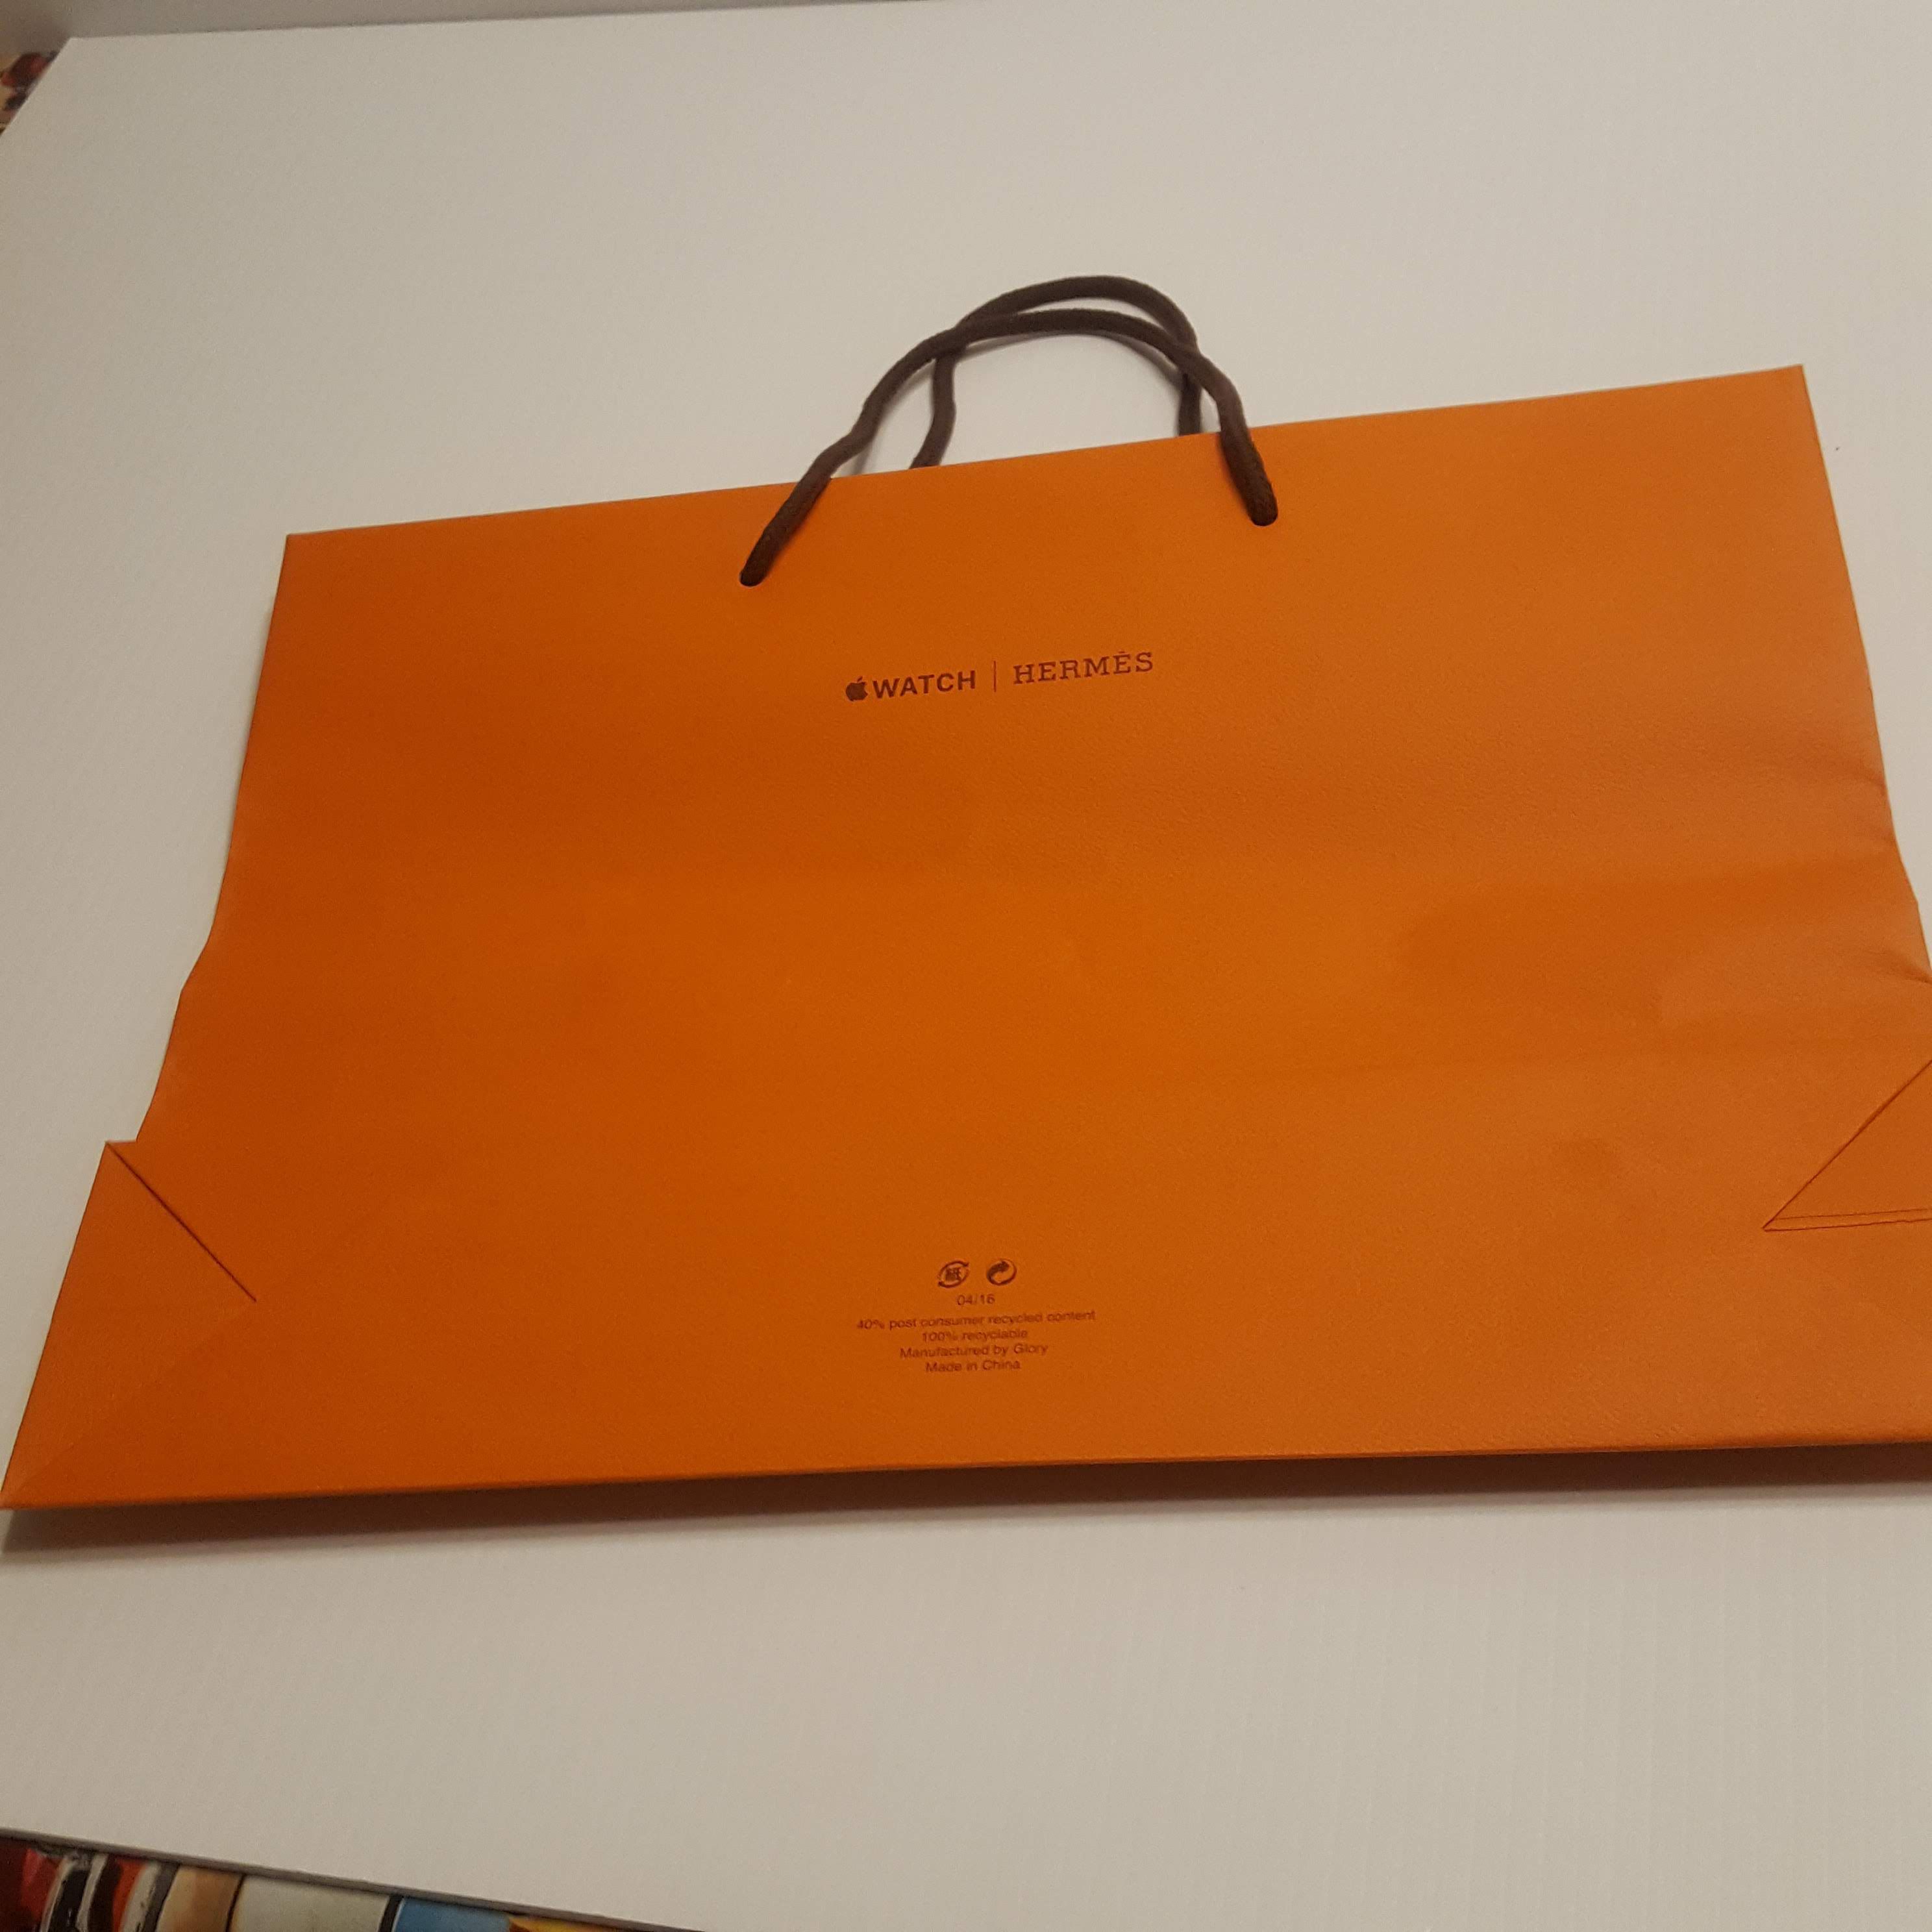 Hermes Orange Shopping Gift Paper Bag . Size 11 x15x3.5”.